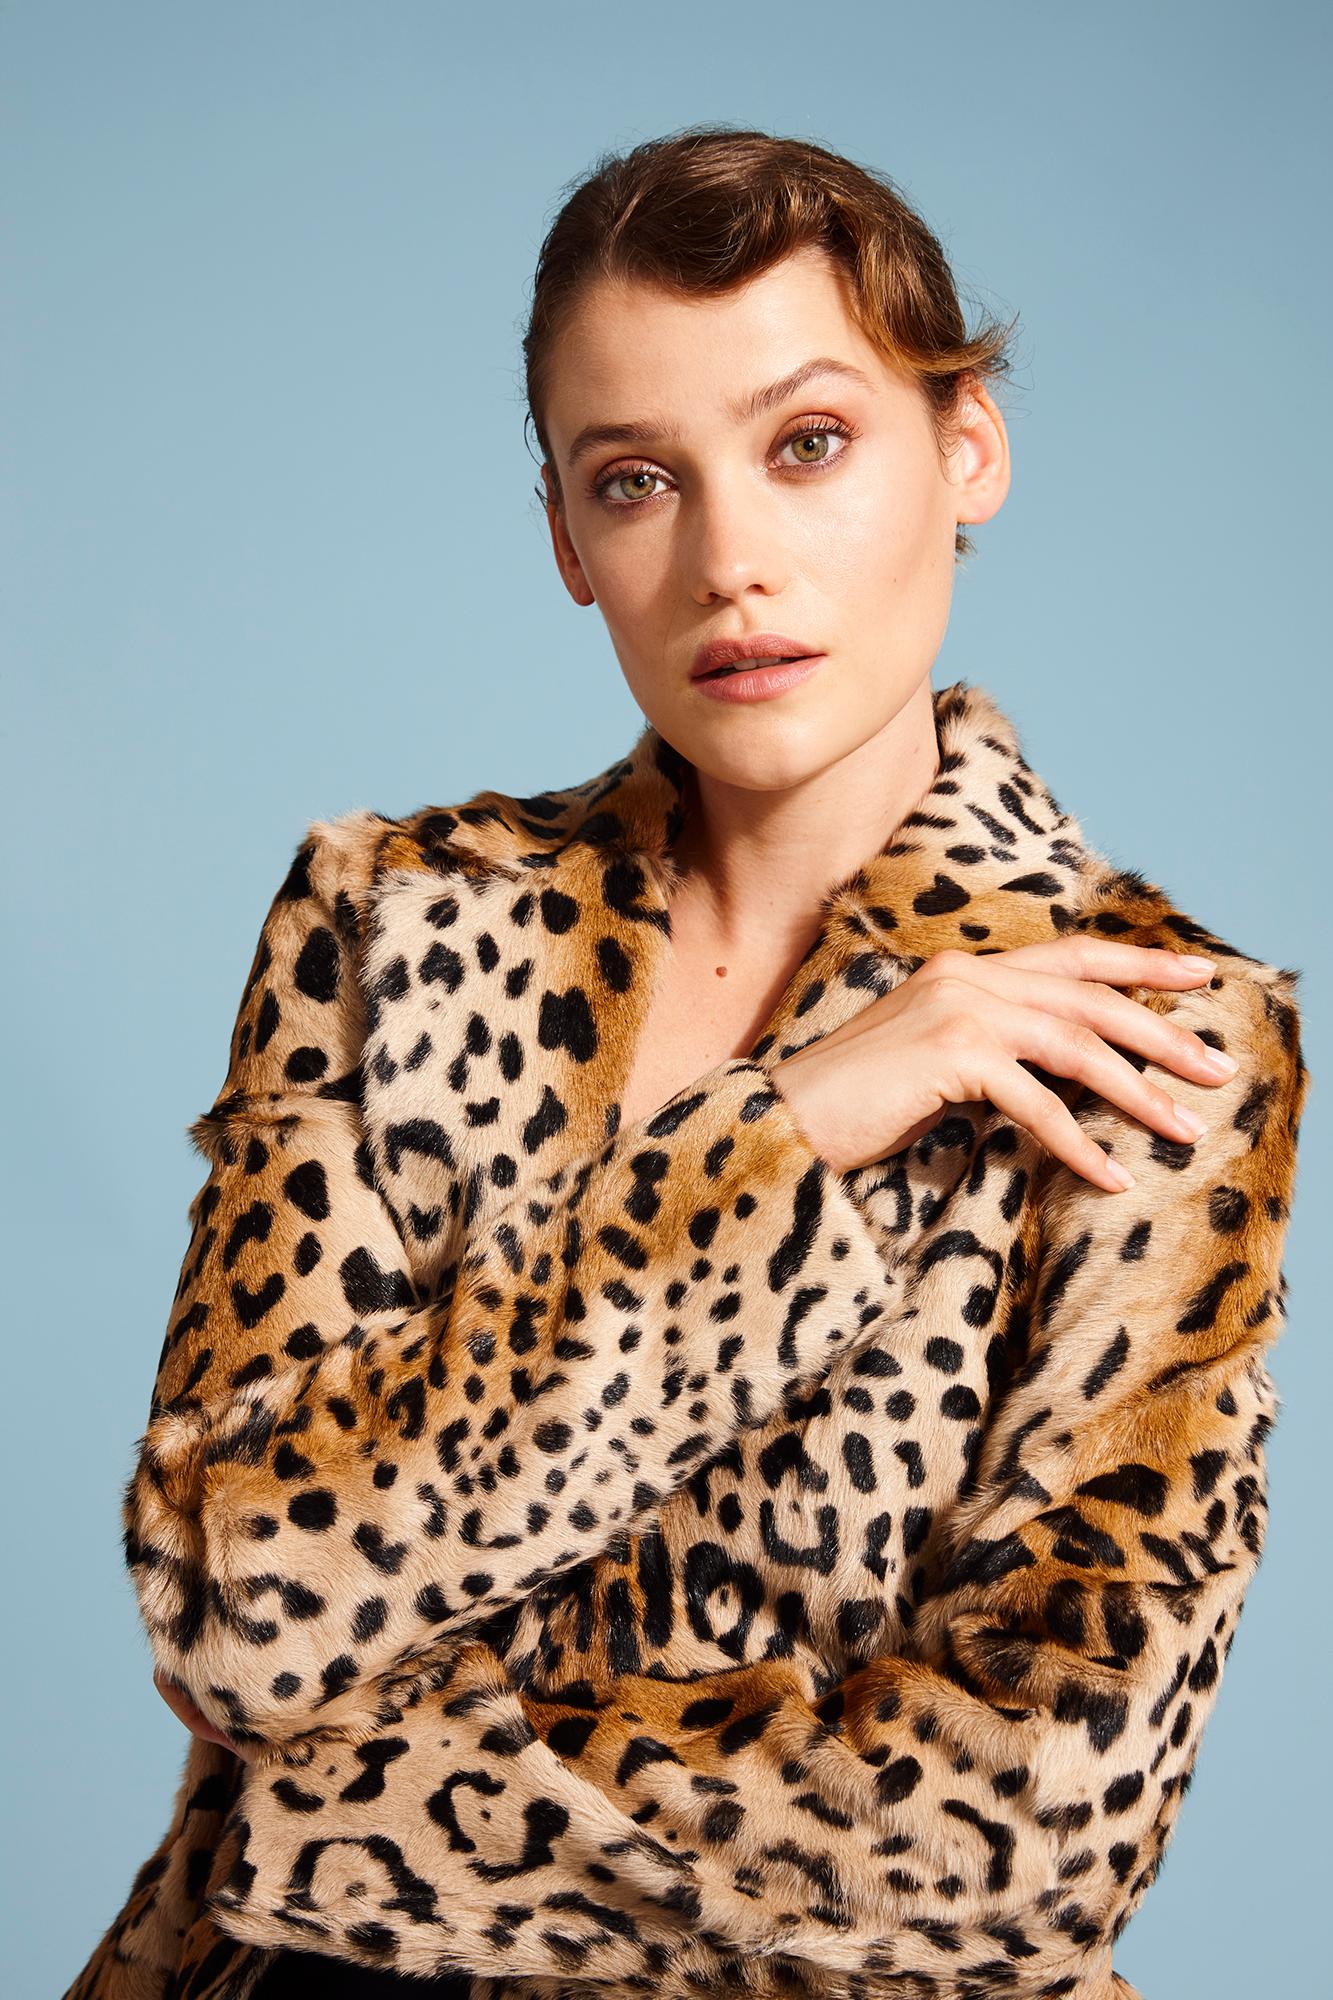 Women's Verheyen London Leopard Print Coat in Red Ruby Goat Hair Fur UK 12  - Brand New 